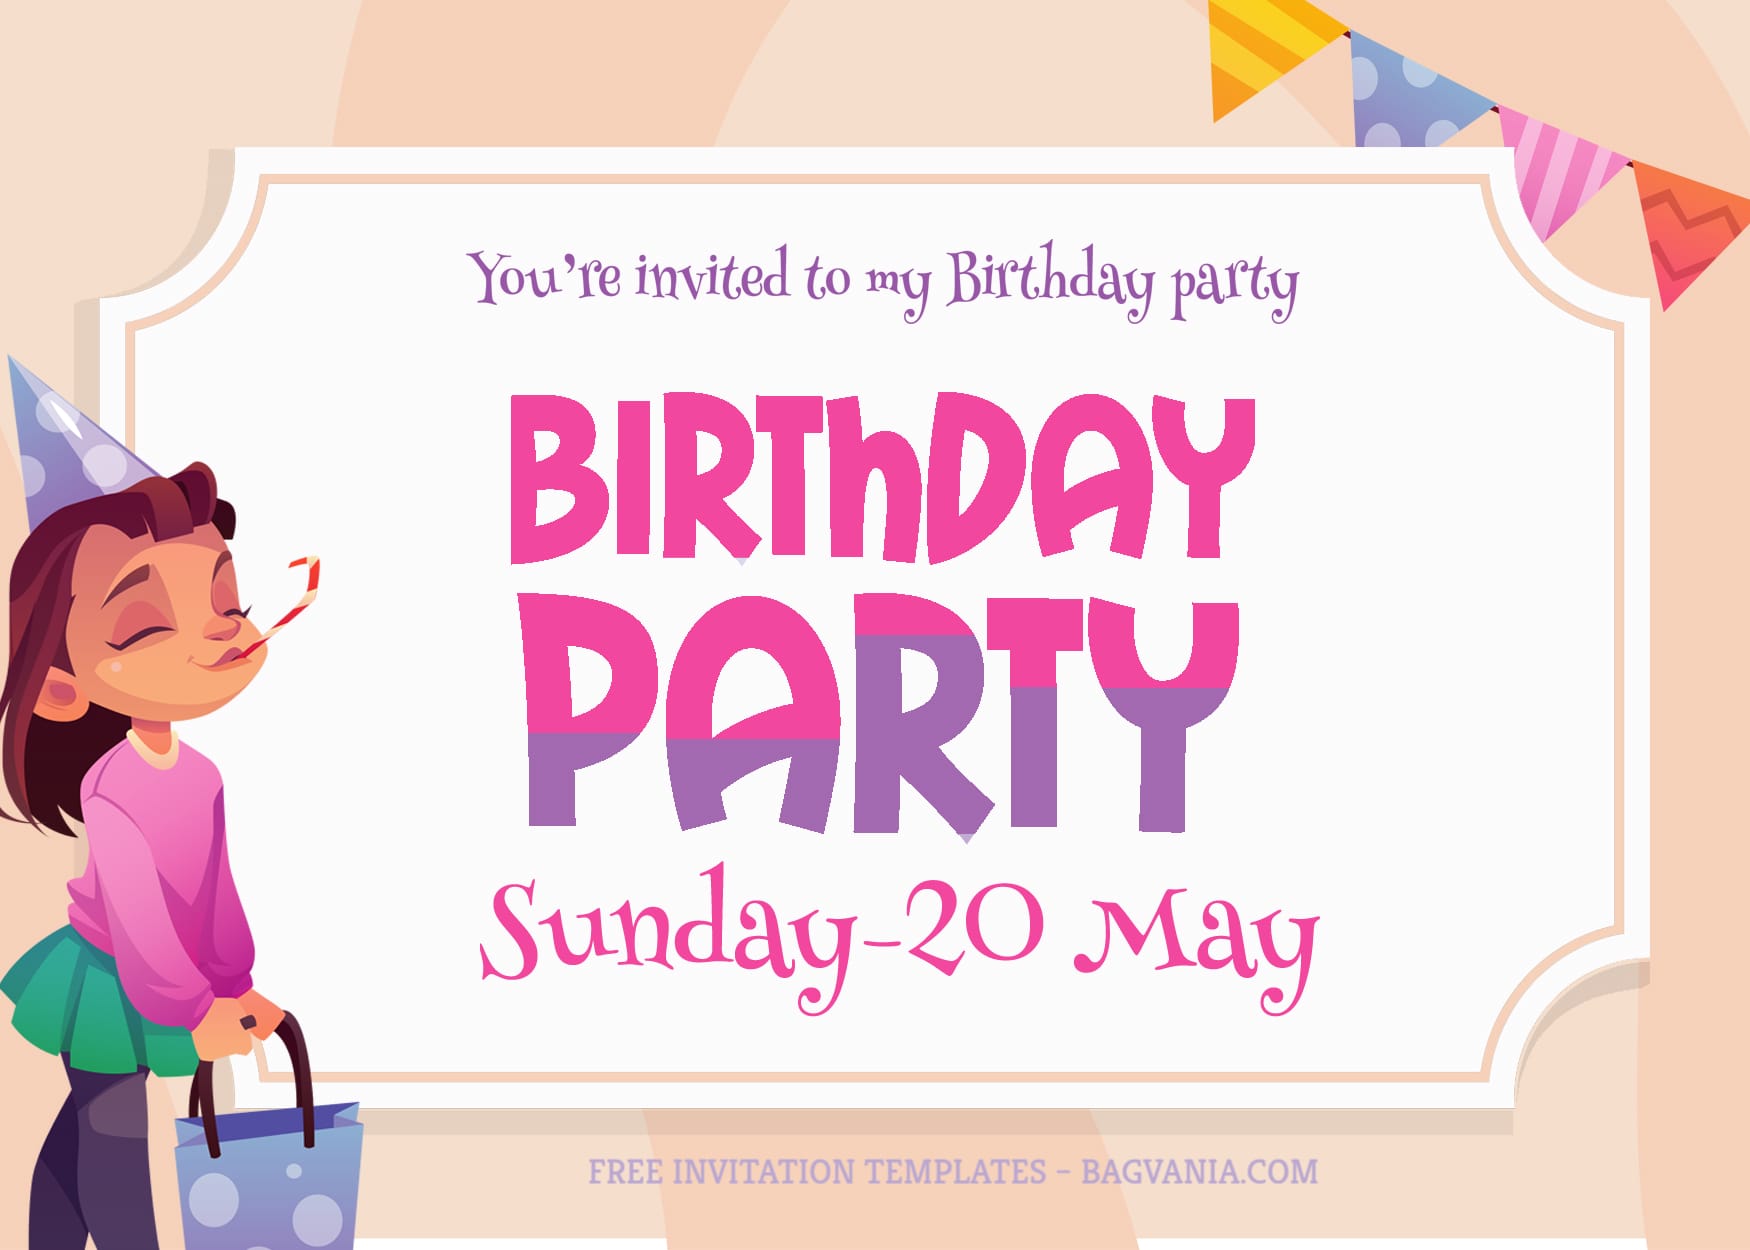 8+ Pretty Cartoon Card For Girls Birthday Invitation Templates | FREE  Printable Birthday Invitation Templates - Bagvania